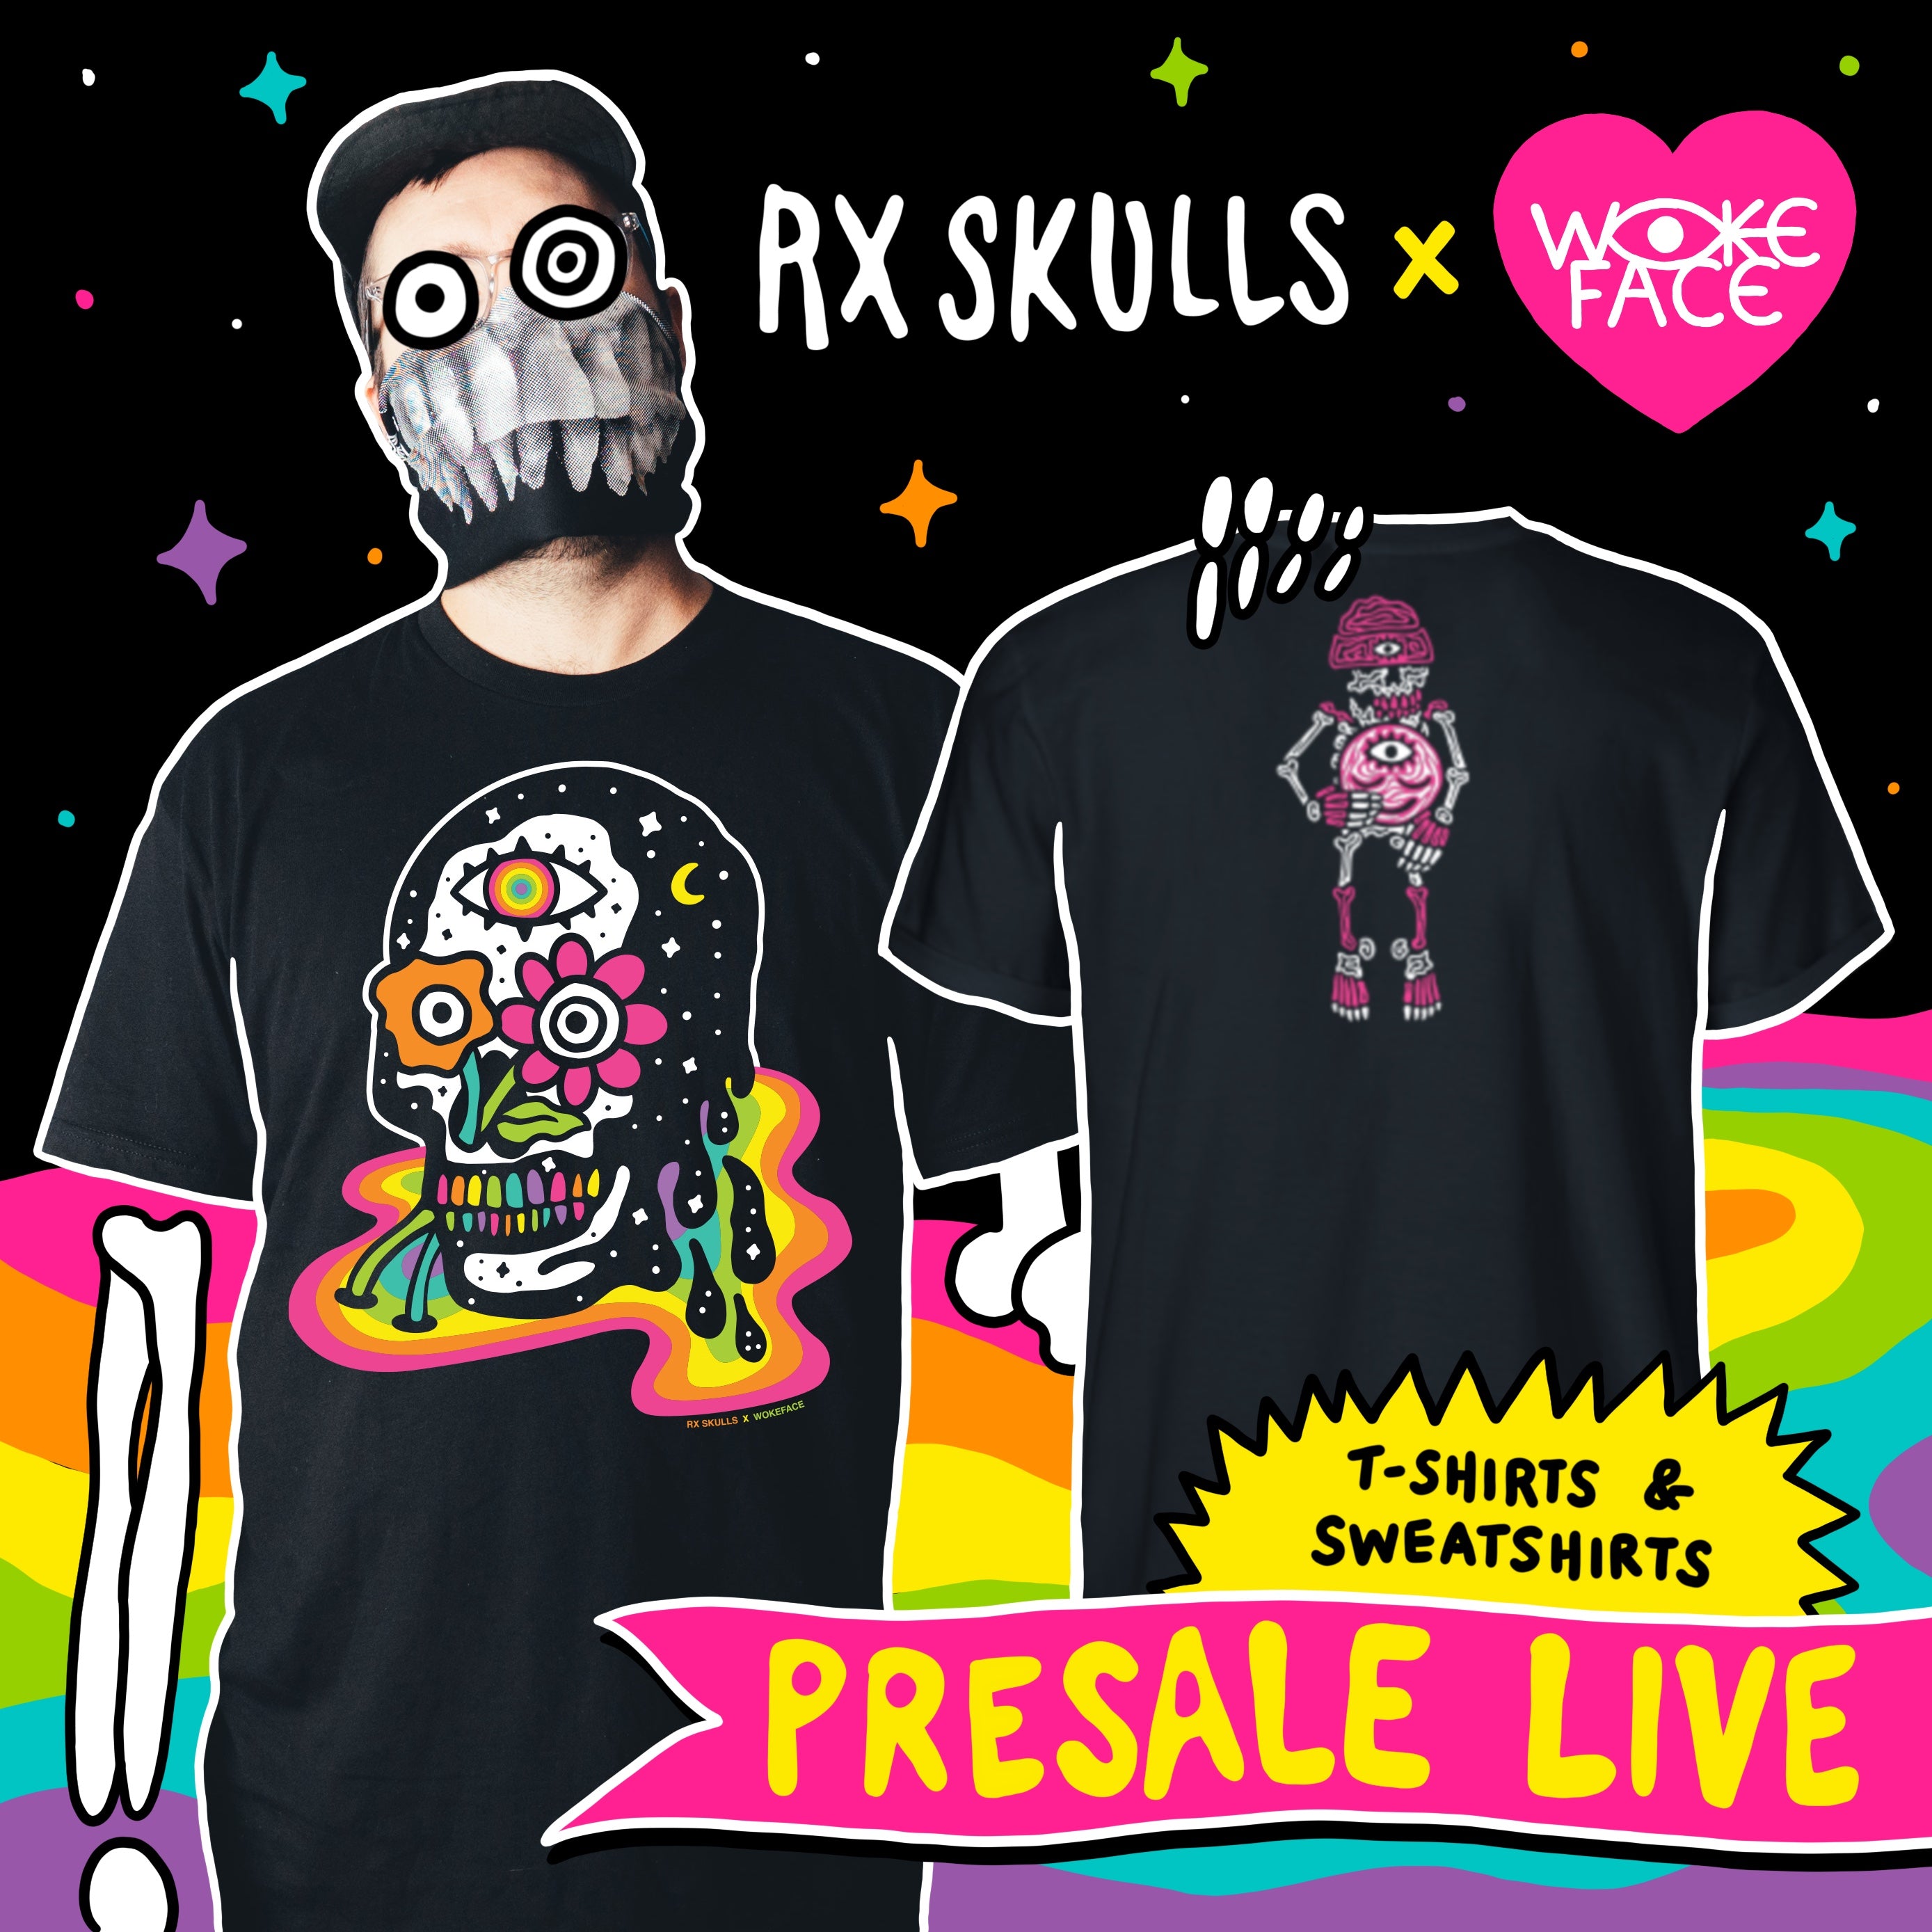 Wokeface x RxSkulls Collab Shirts & Sweatshirts